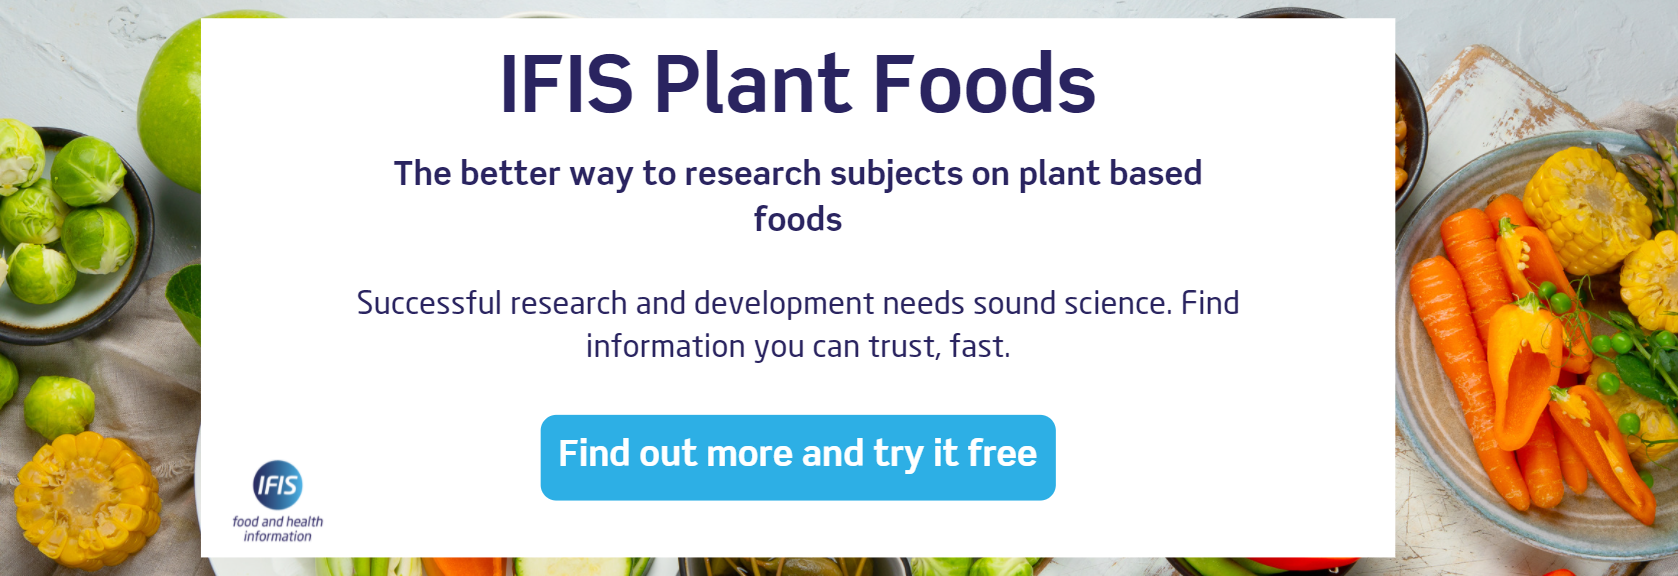 IFIS Plant Foods CTA-3